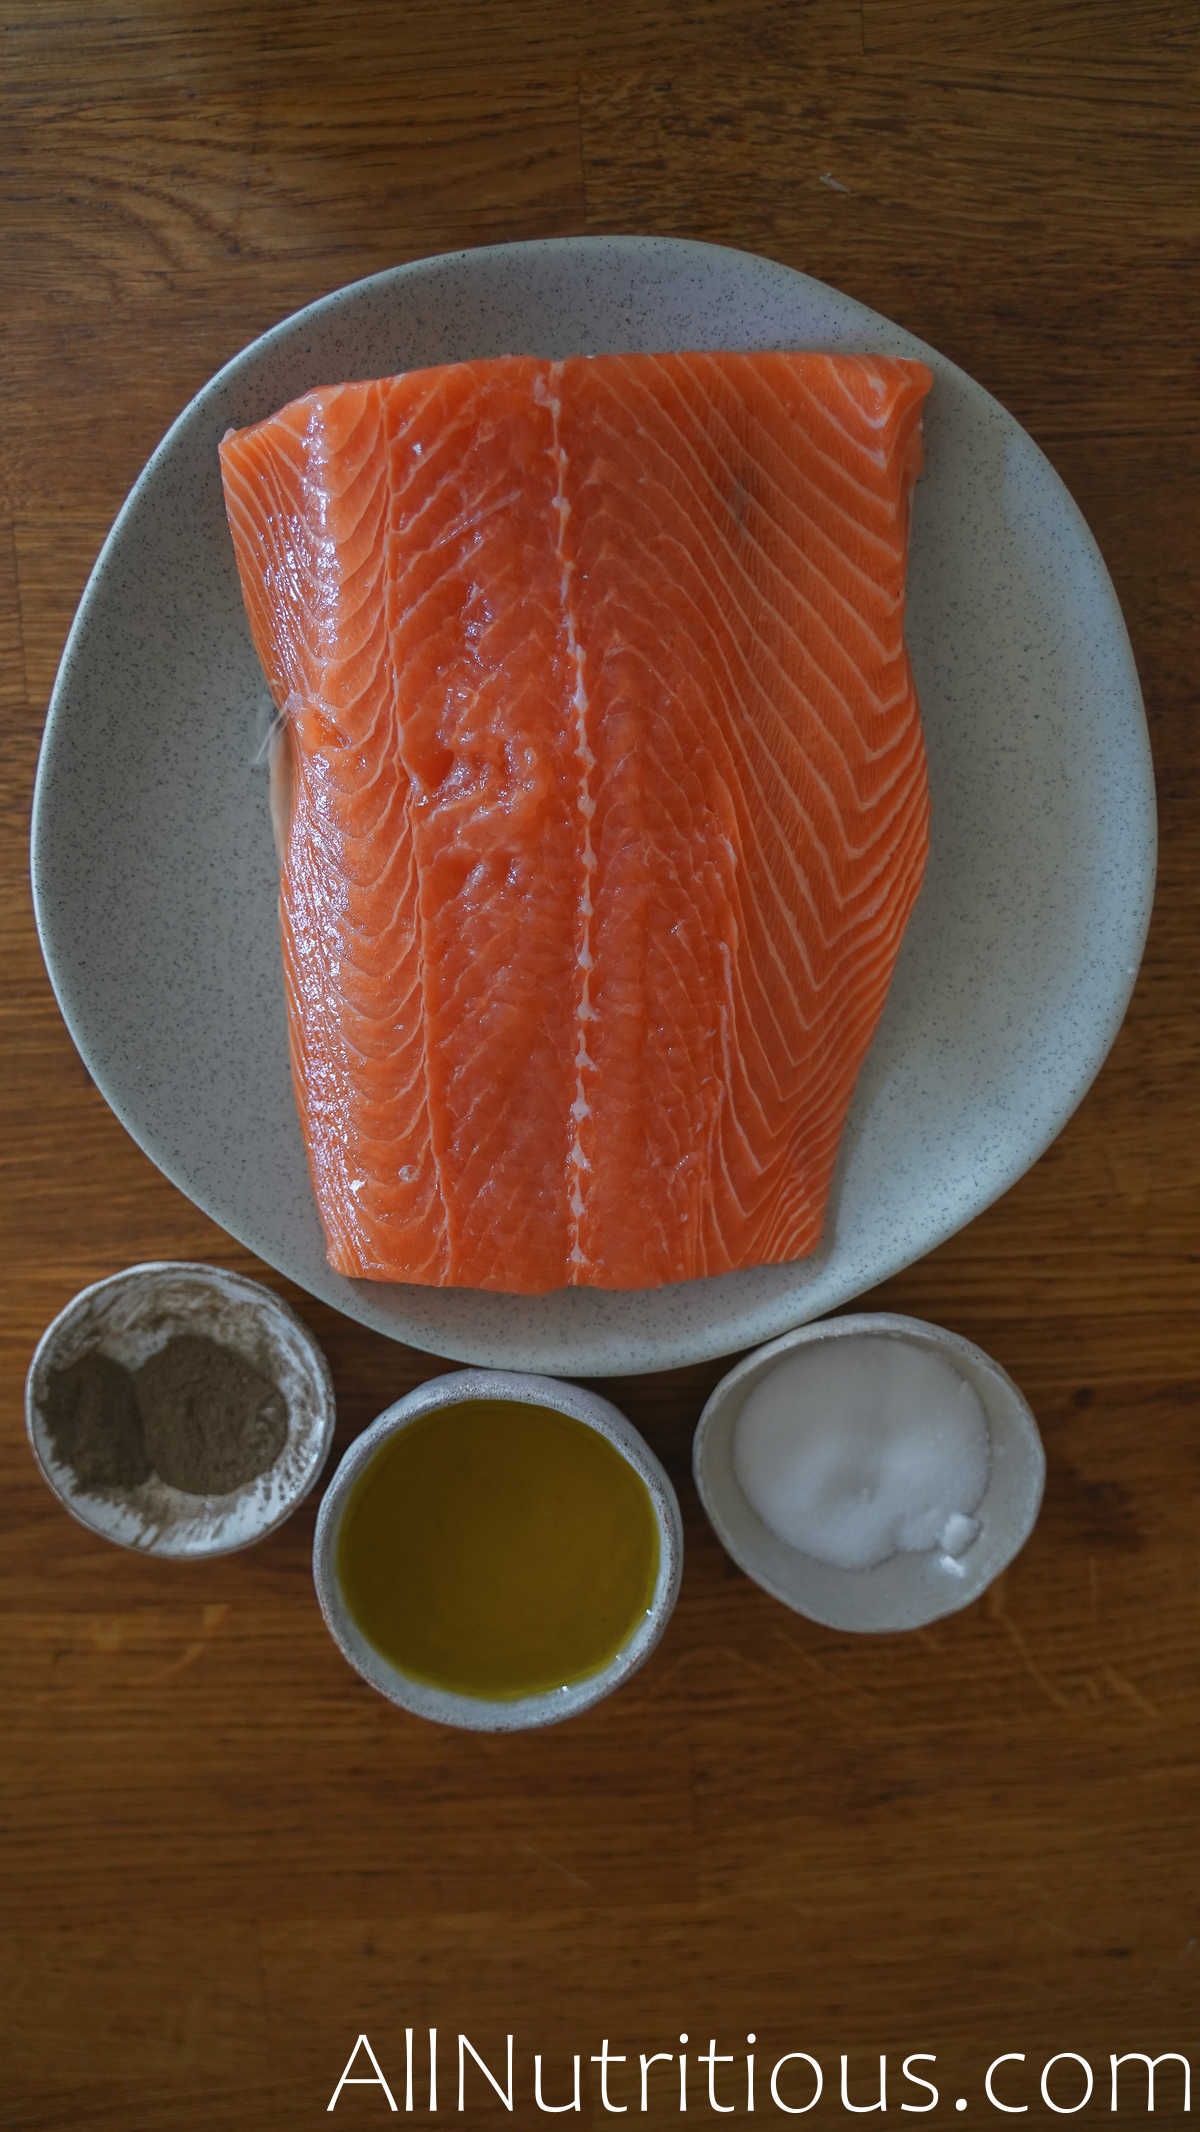 raw salmon